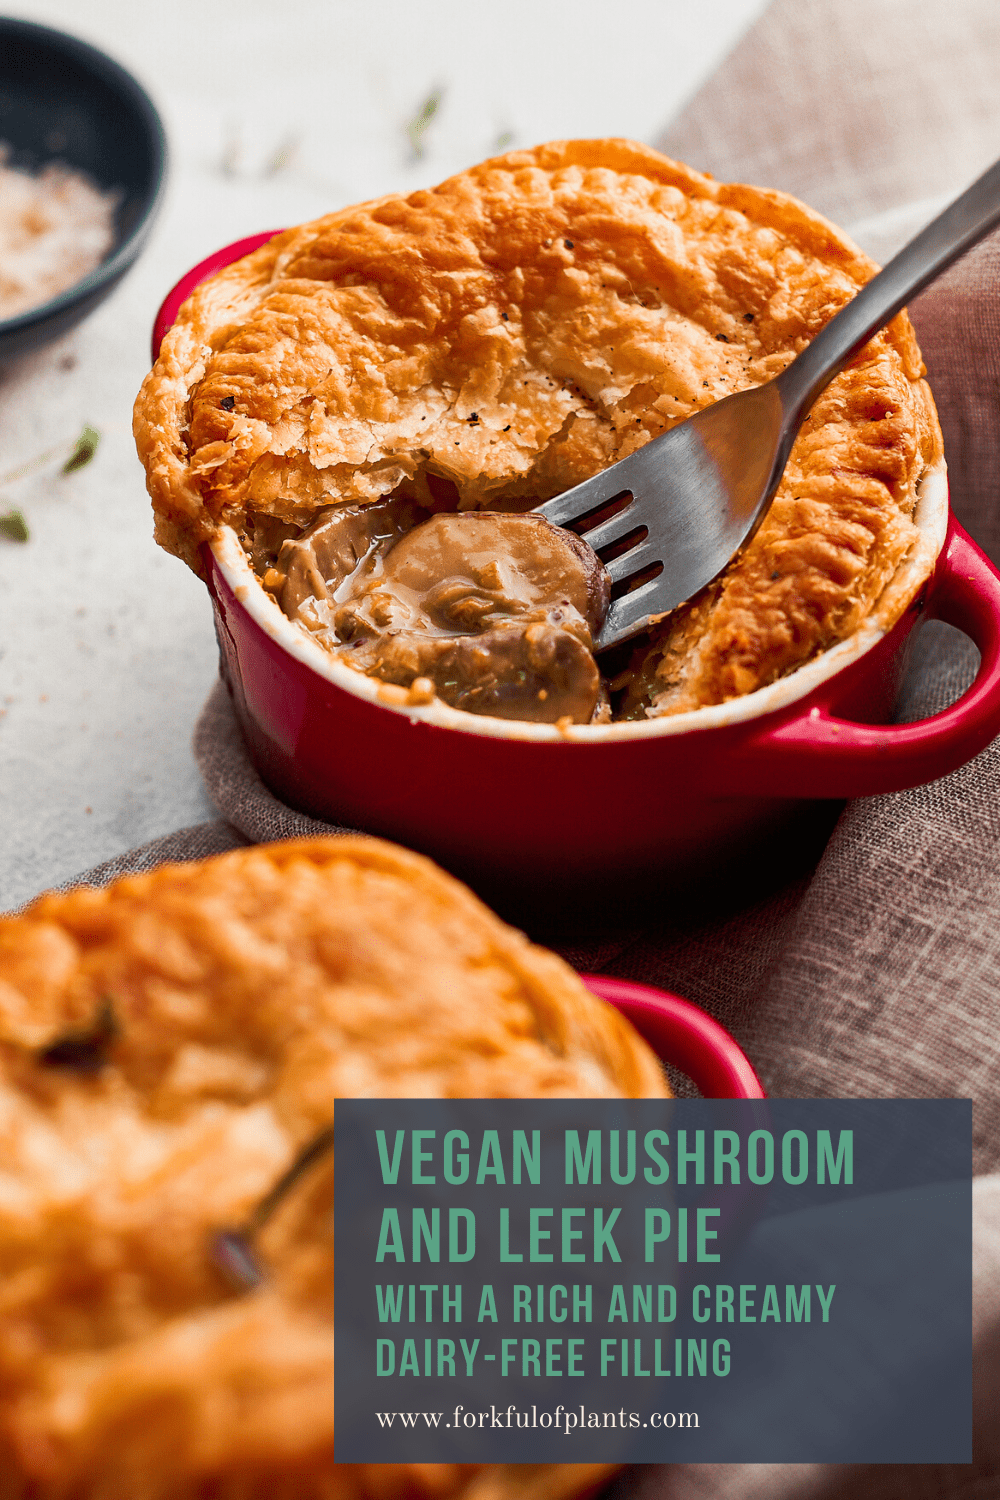 vegan leek recipes, The 21 Best Vegan Leek Recipes!